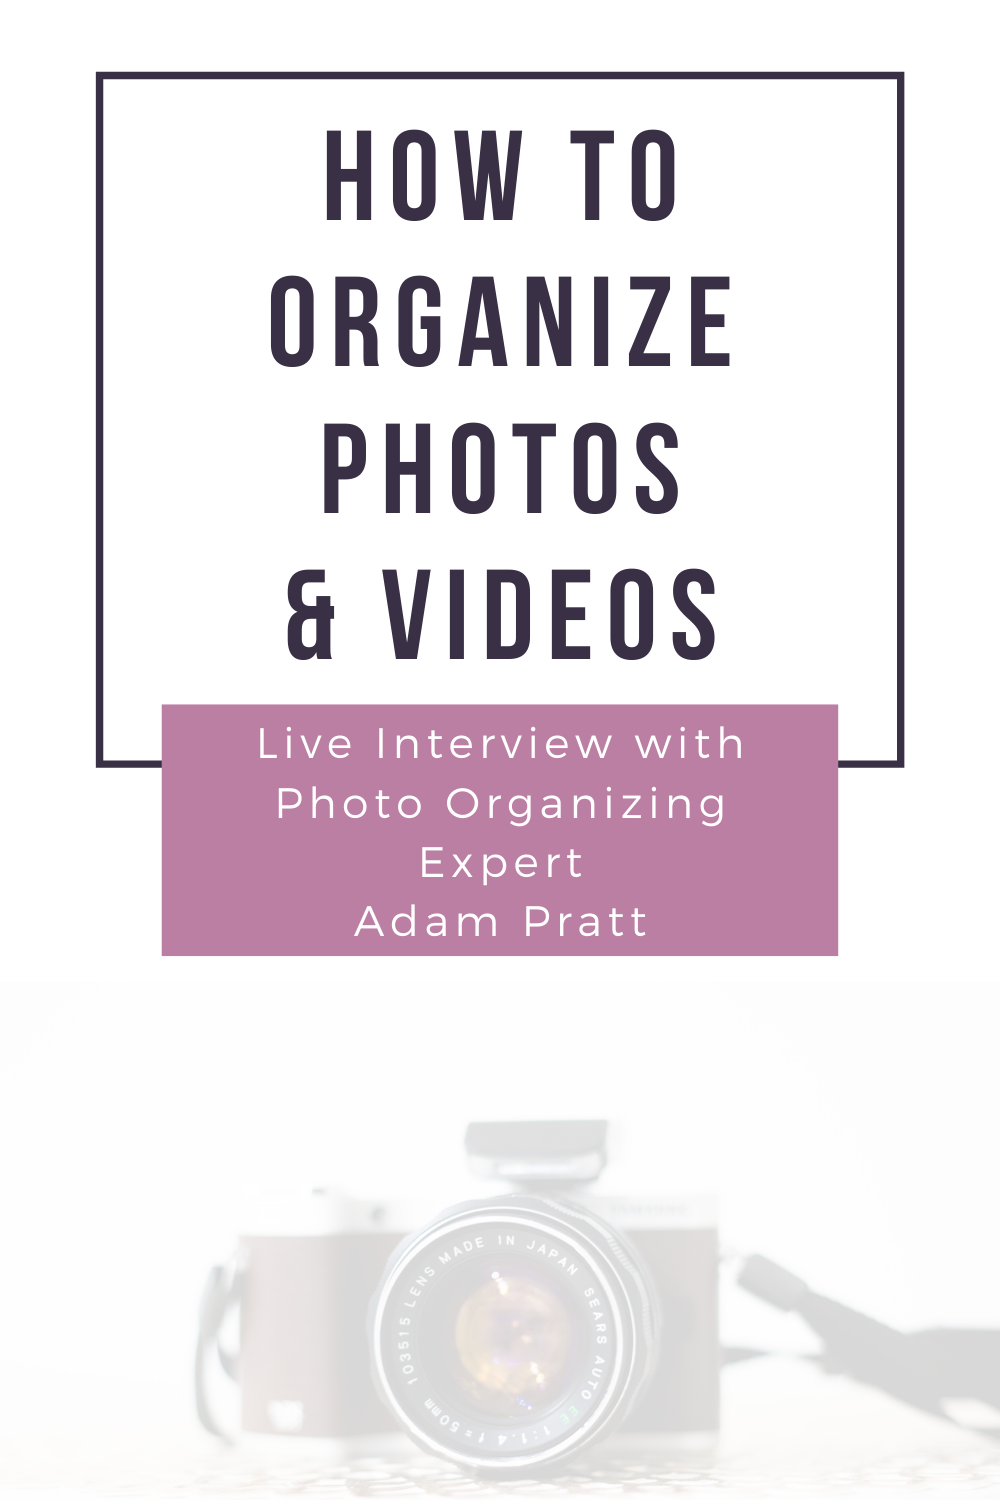 HOW TO ORGANIZE PHOTOS & VIDEOS with Adam Pratt